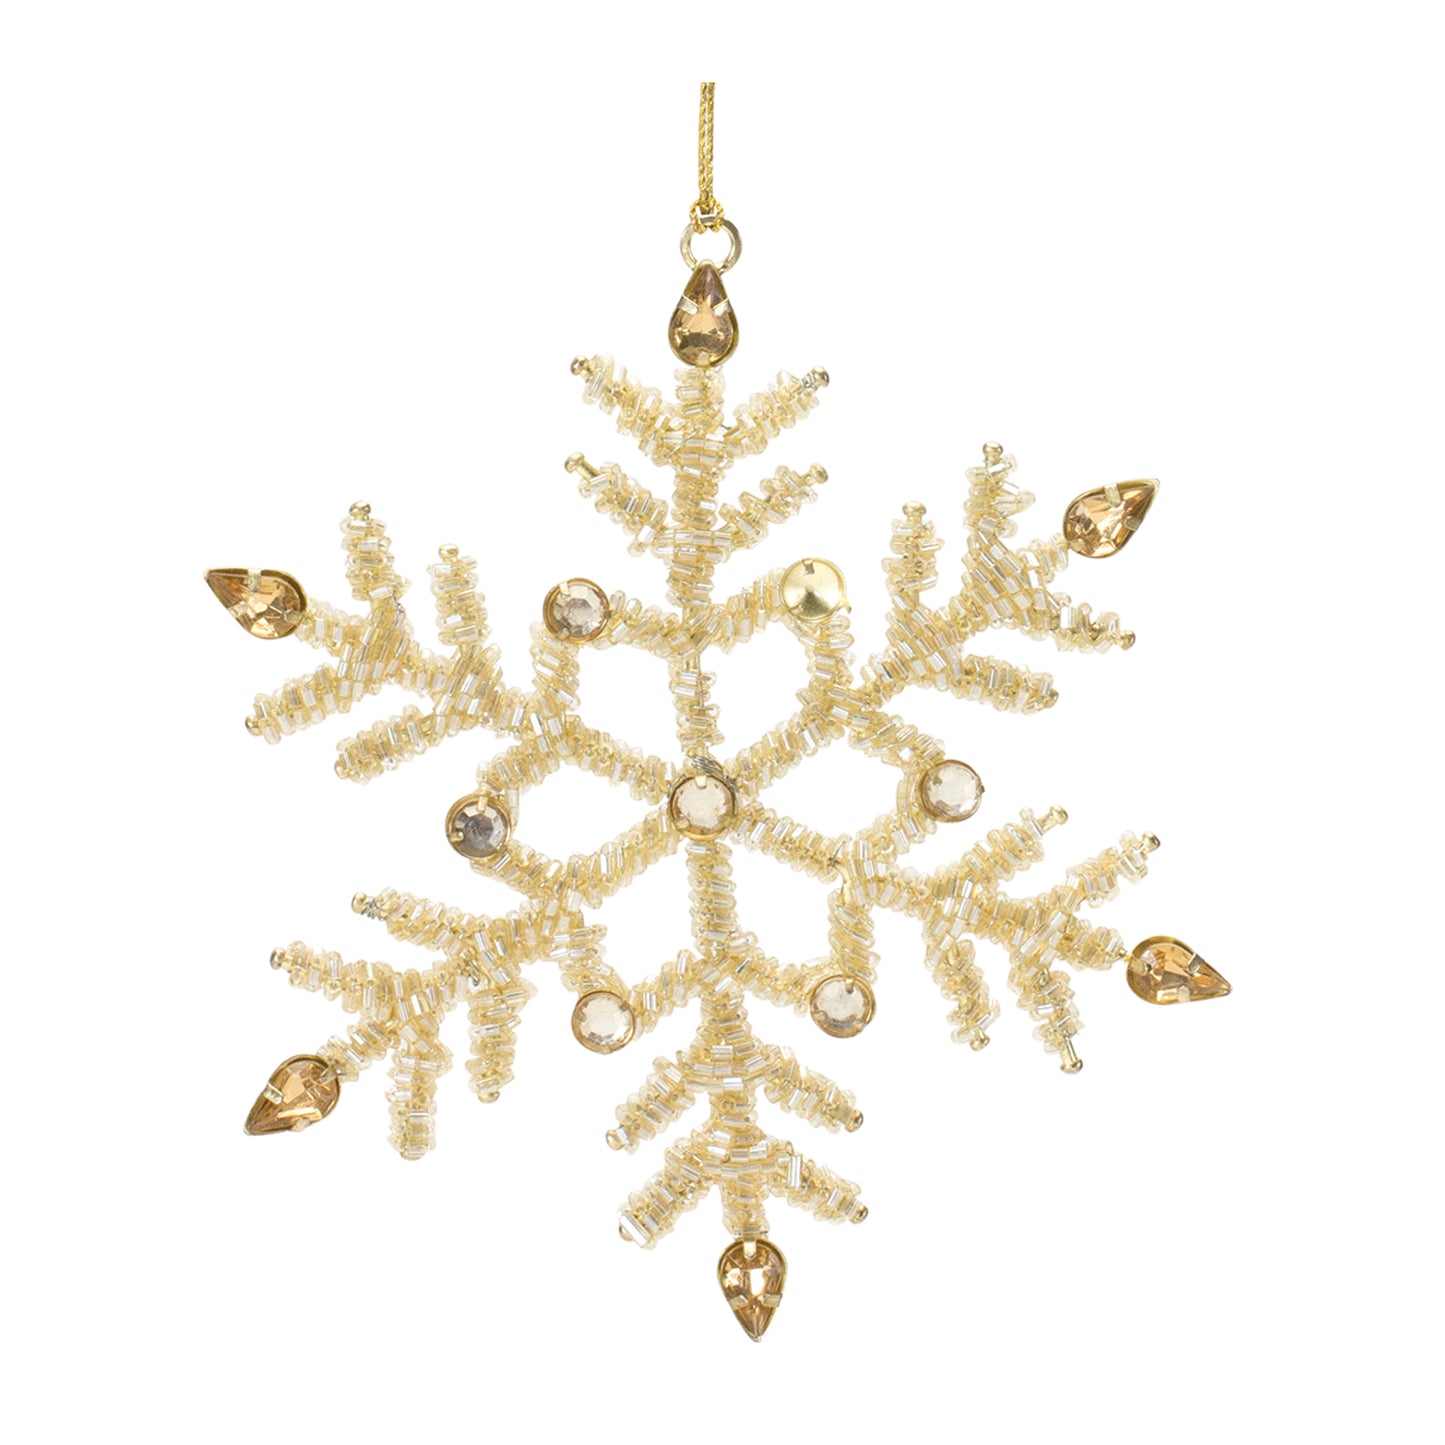 5.5"H Iron/Glass Snowflake Ornament